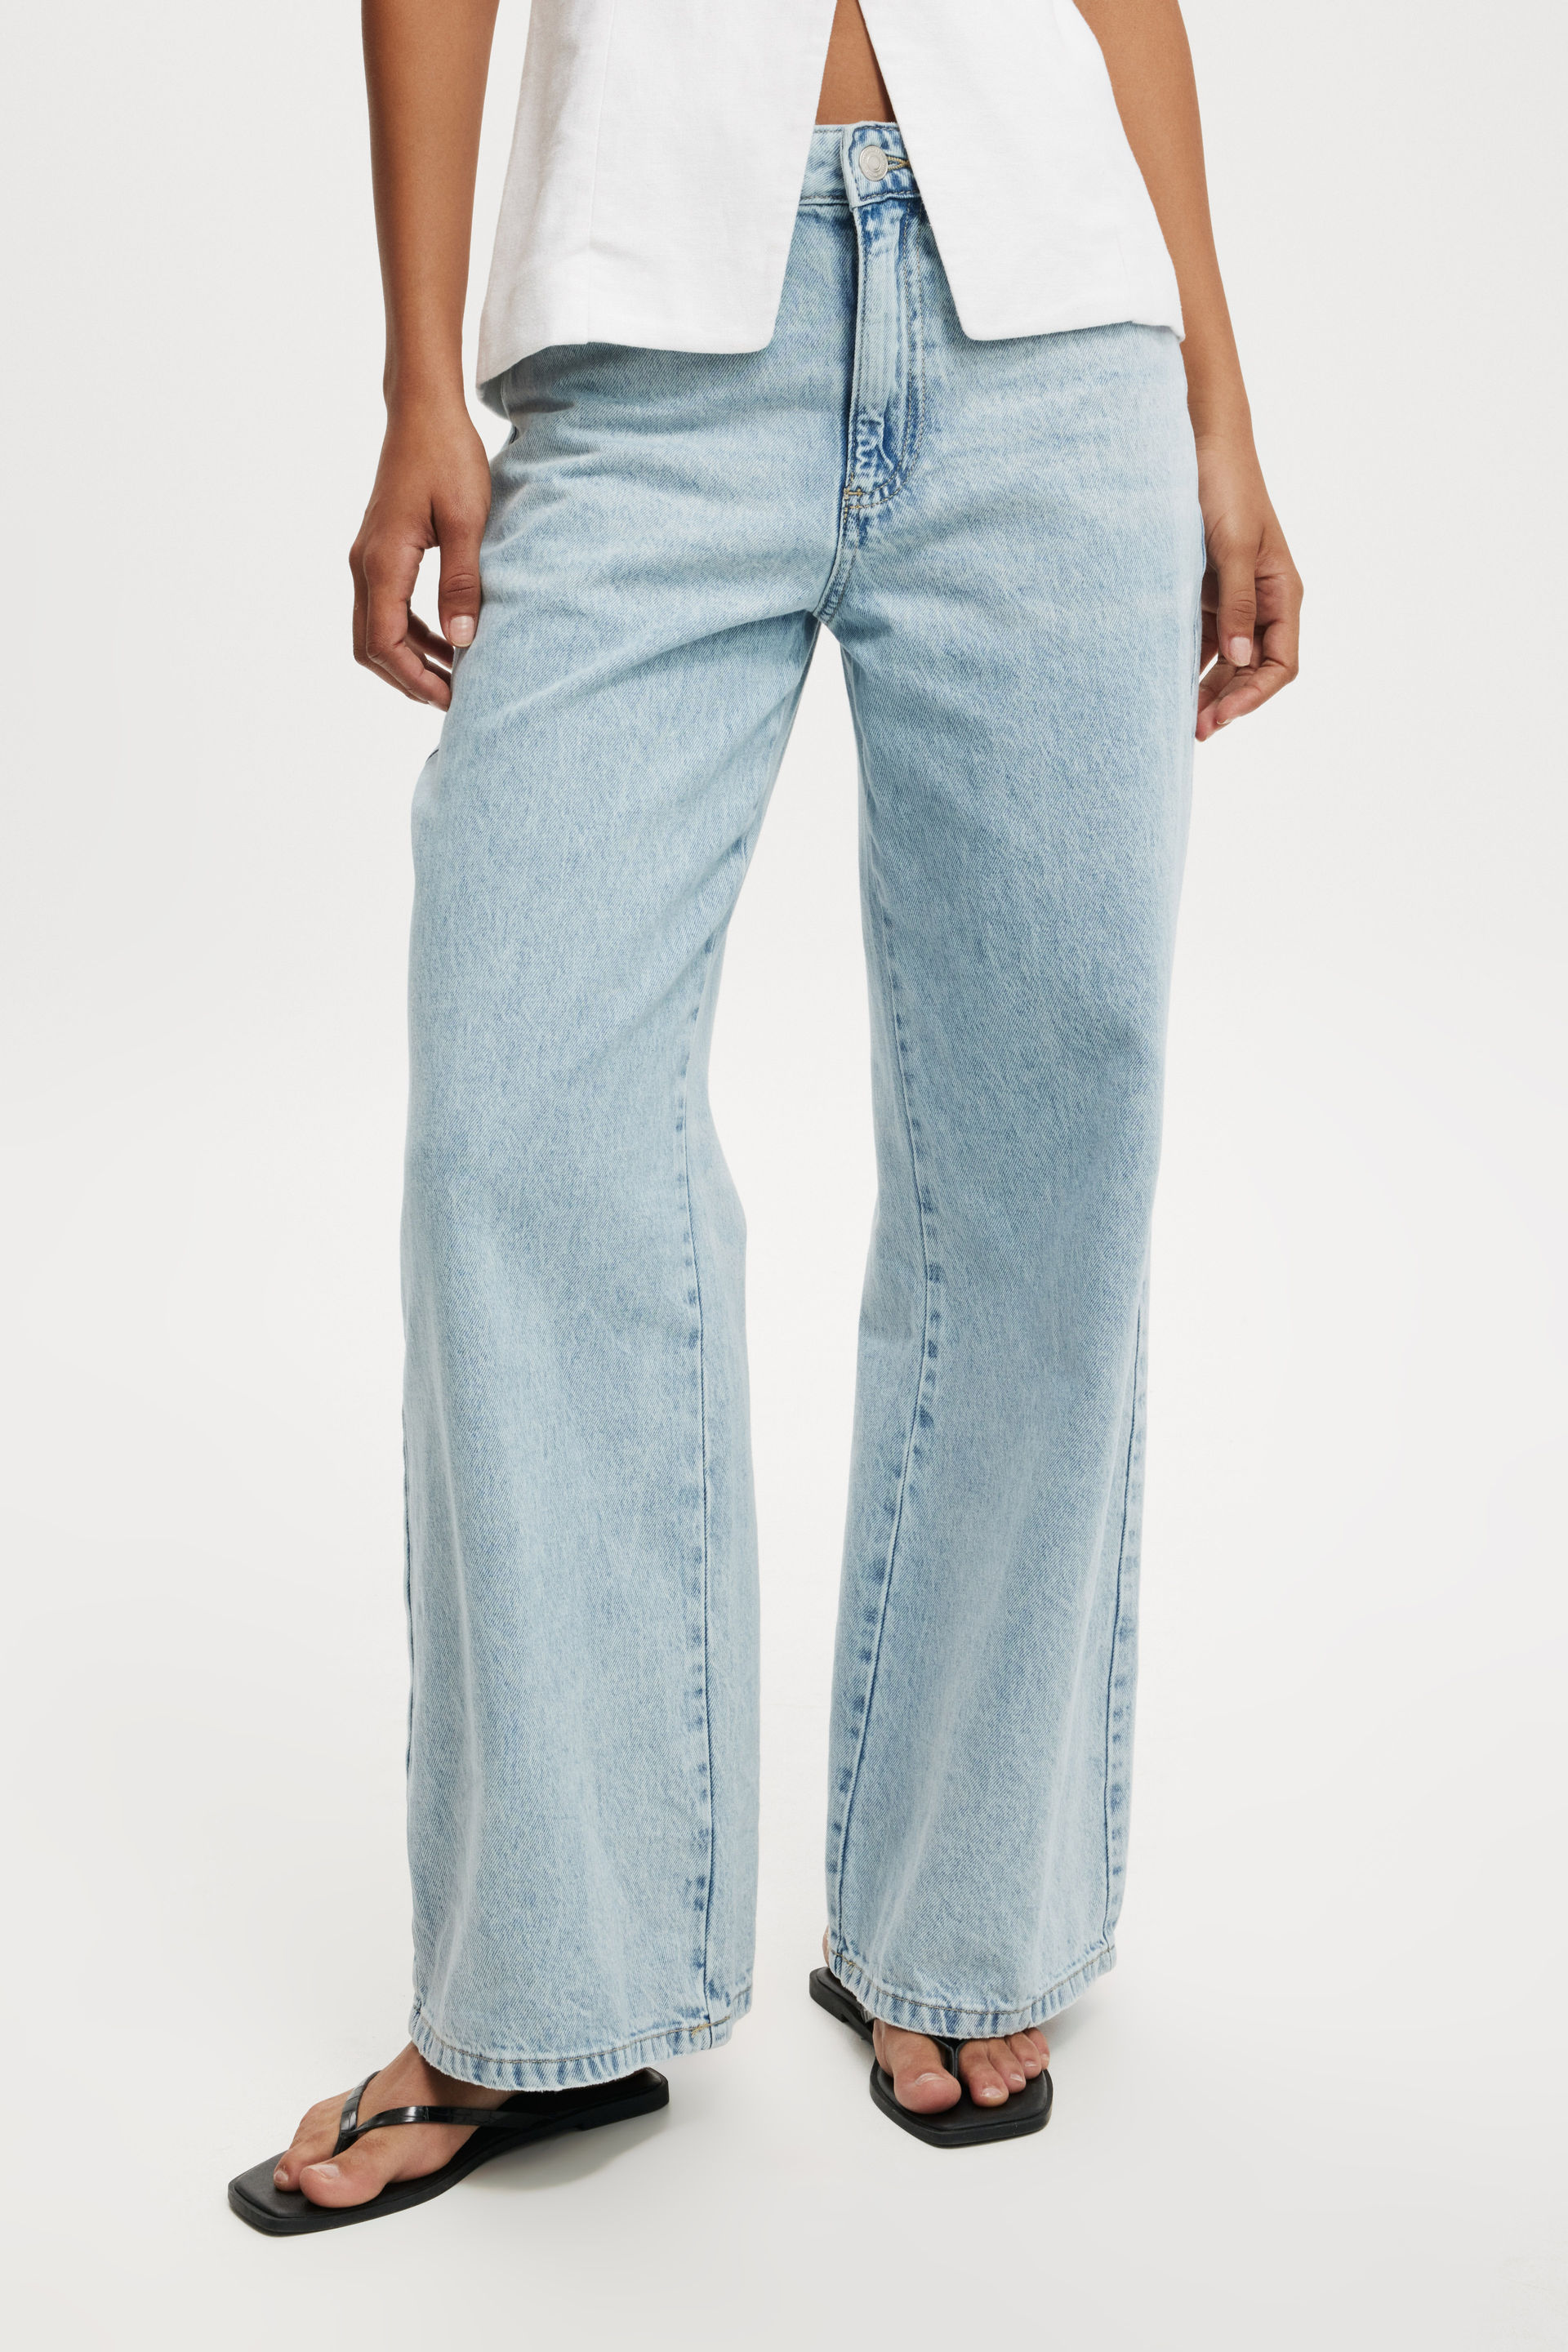 Jeans For Short Curvy Women